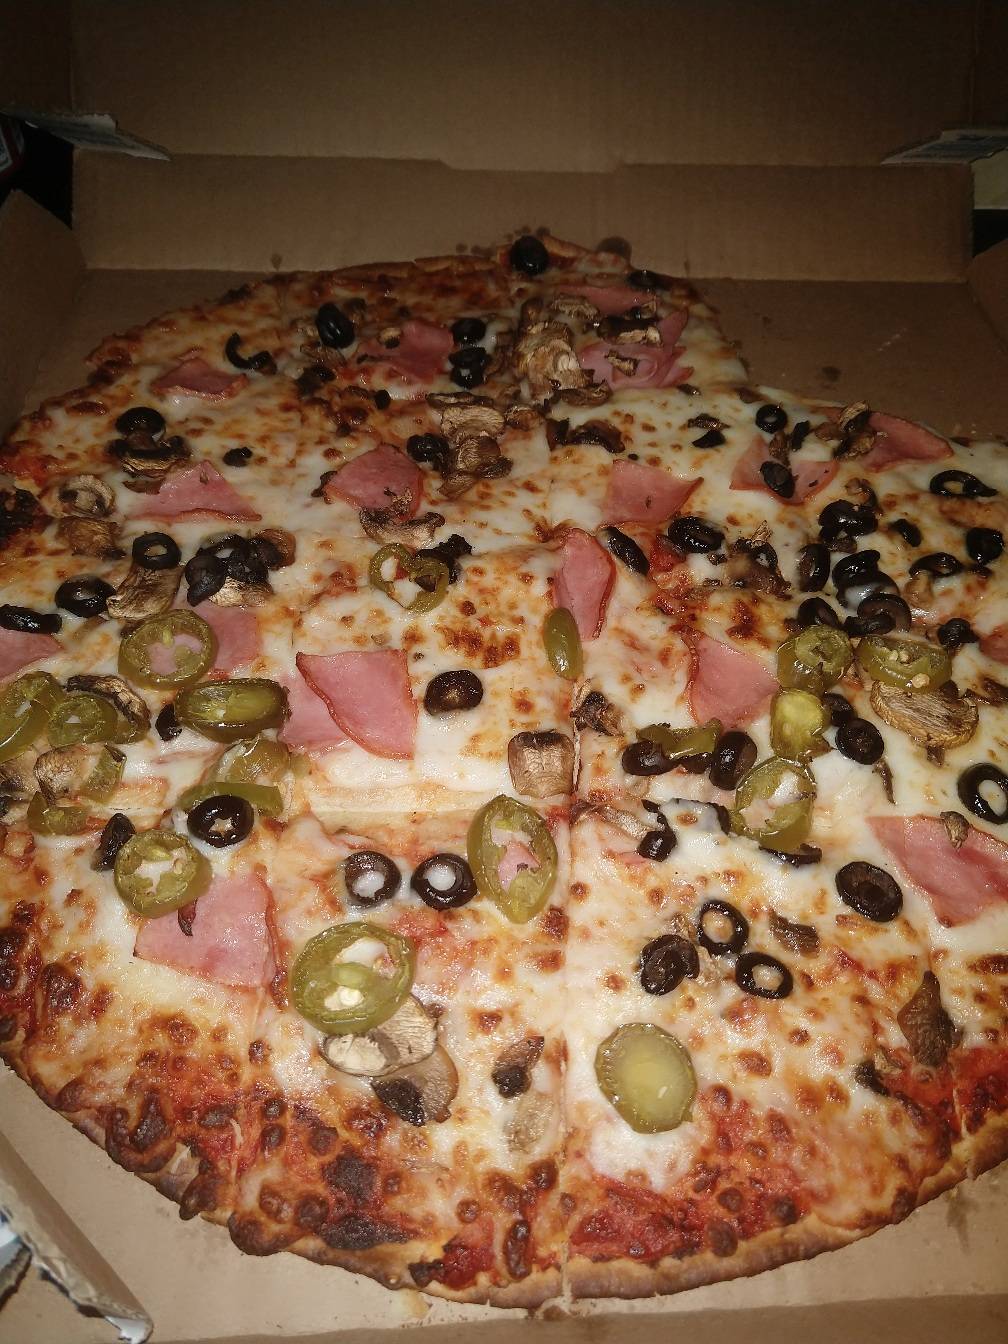 Dominos Pizza | meal delivery | 1659 Branham Ln Ste G, San Jose, CA 95118, USA | 4084483722 OR +1 408-448-3722